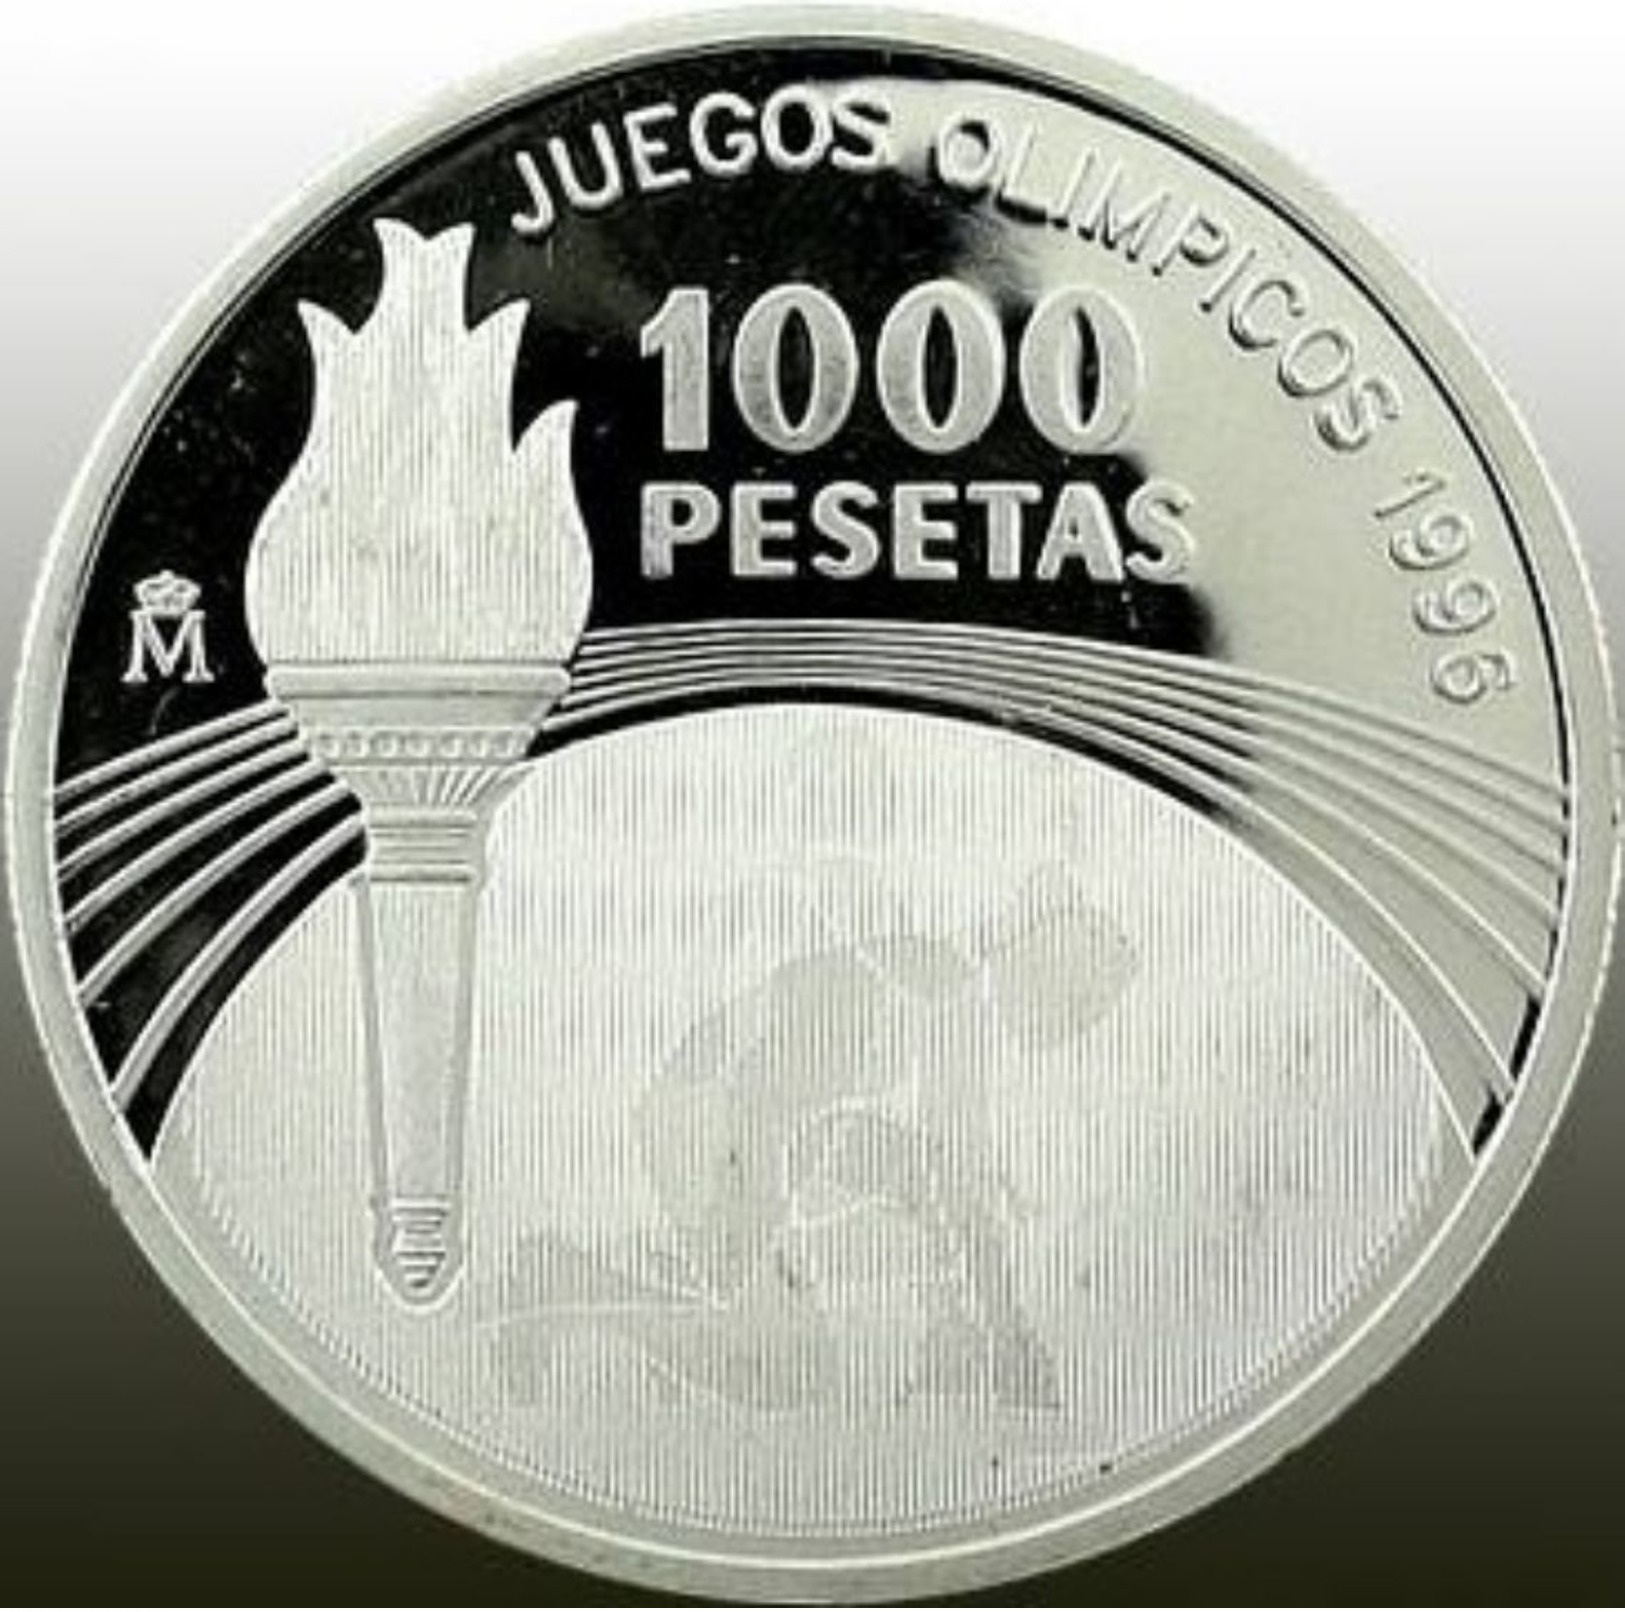 Espagne, 1000 Pesetas 1995 - Argent /silver Proof - Hologram - 1 000 Pesetas